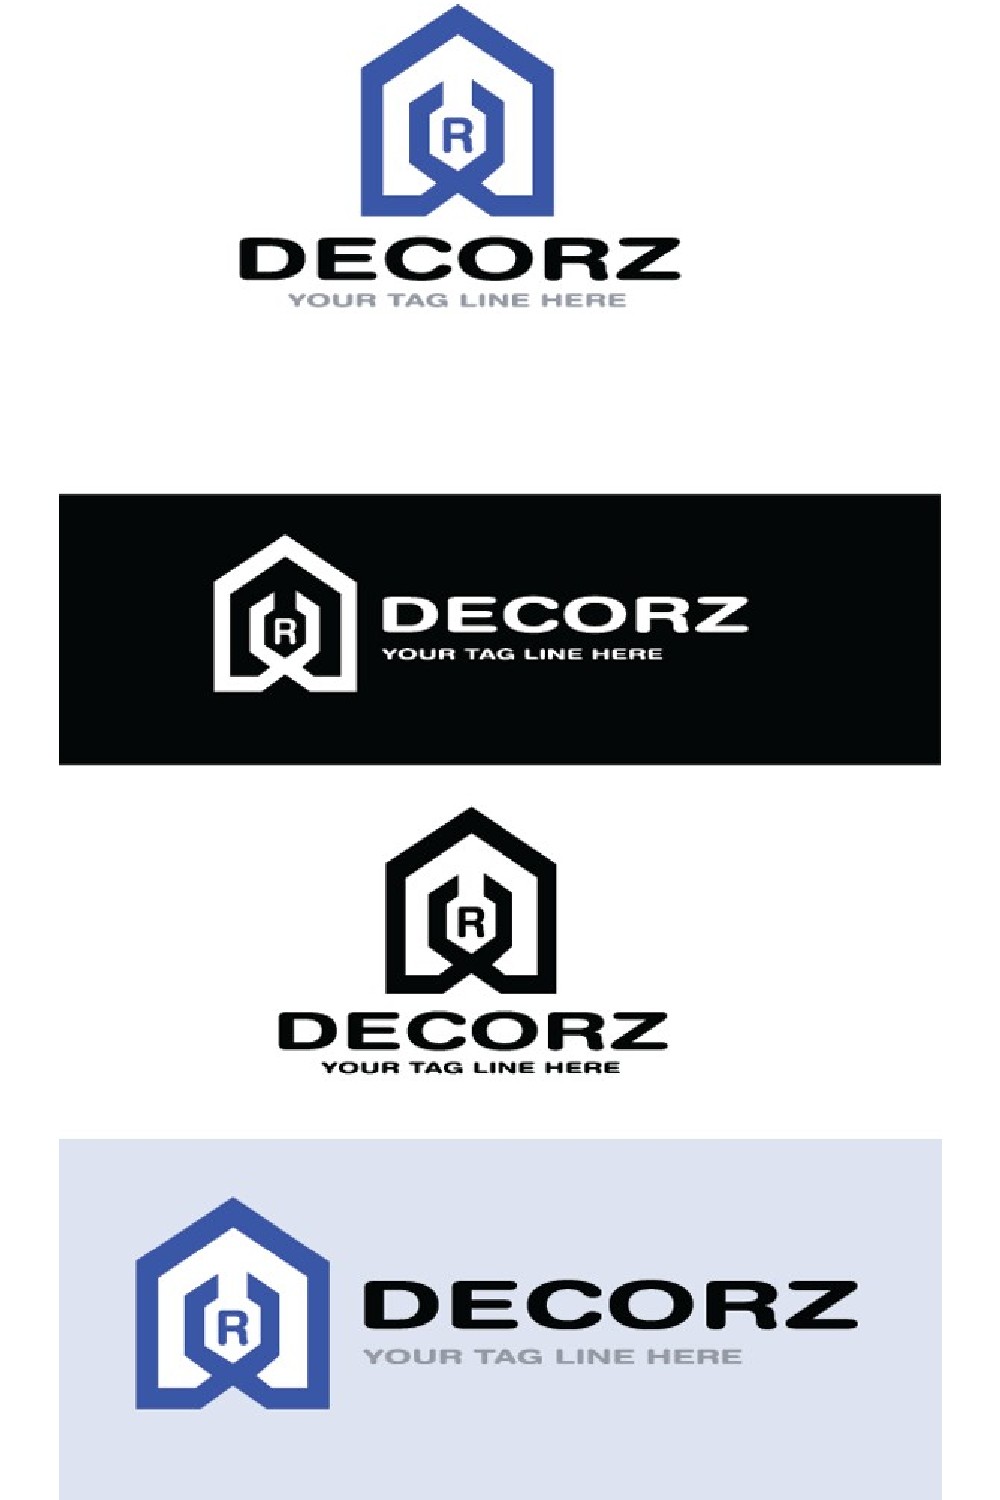 Docorz Real Estate Logo - Editable pinterest image.